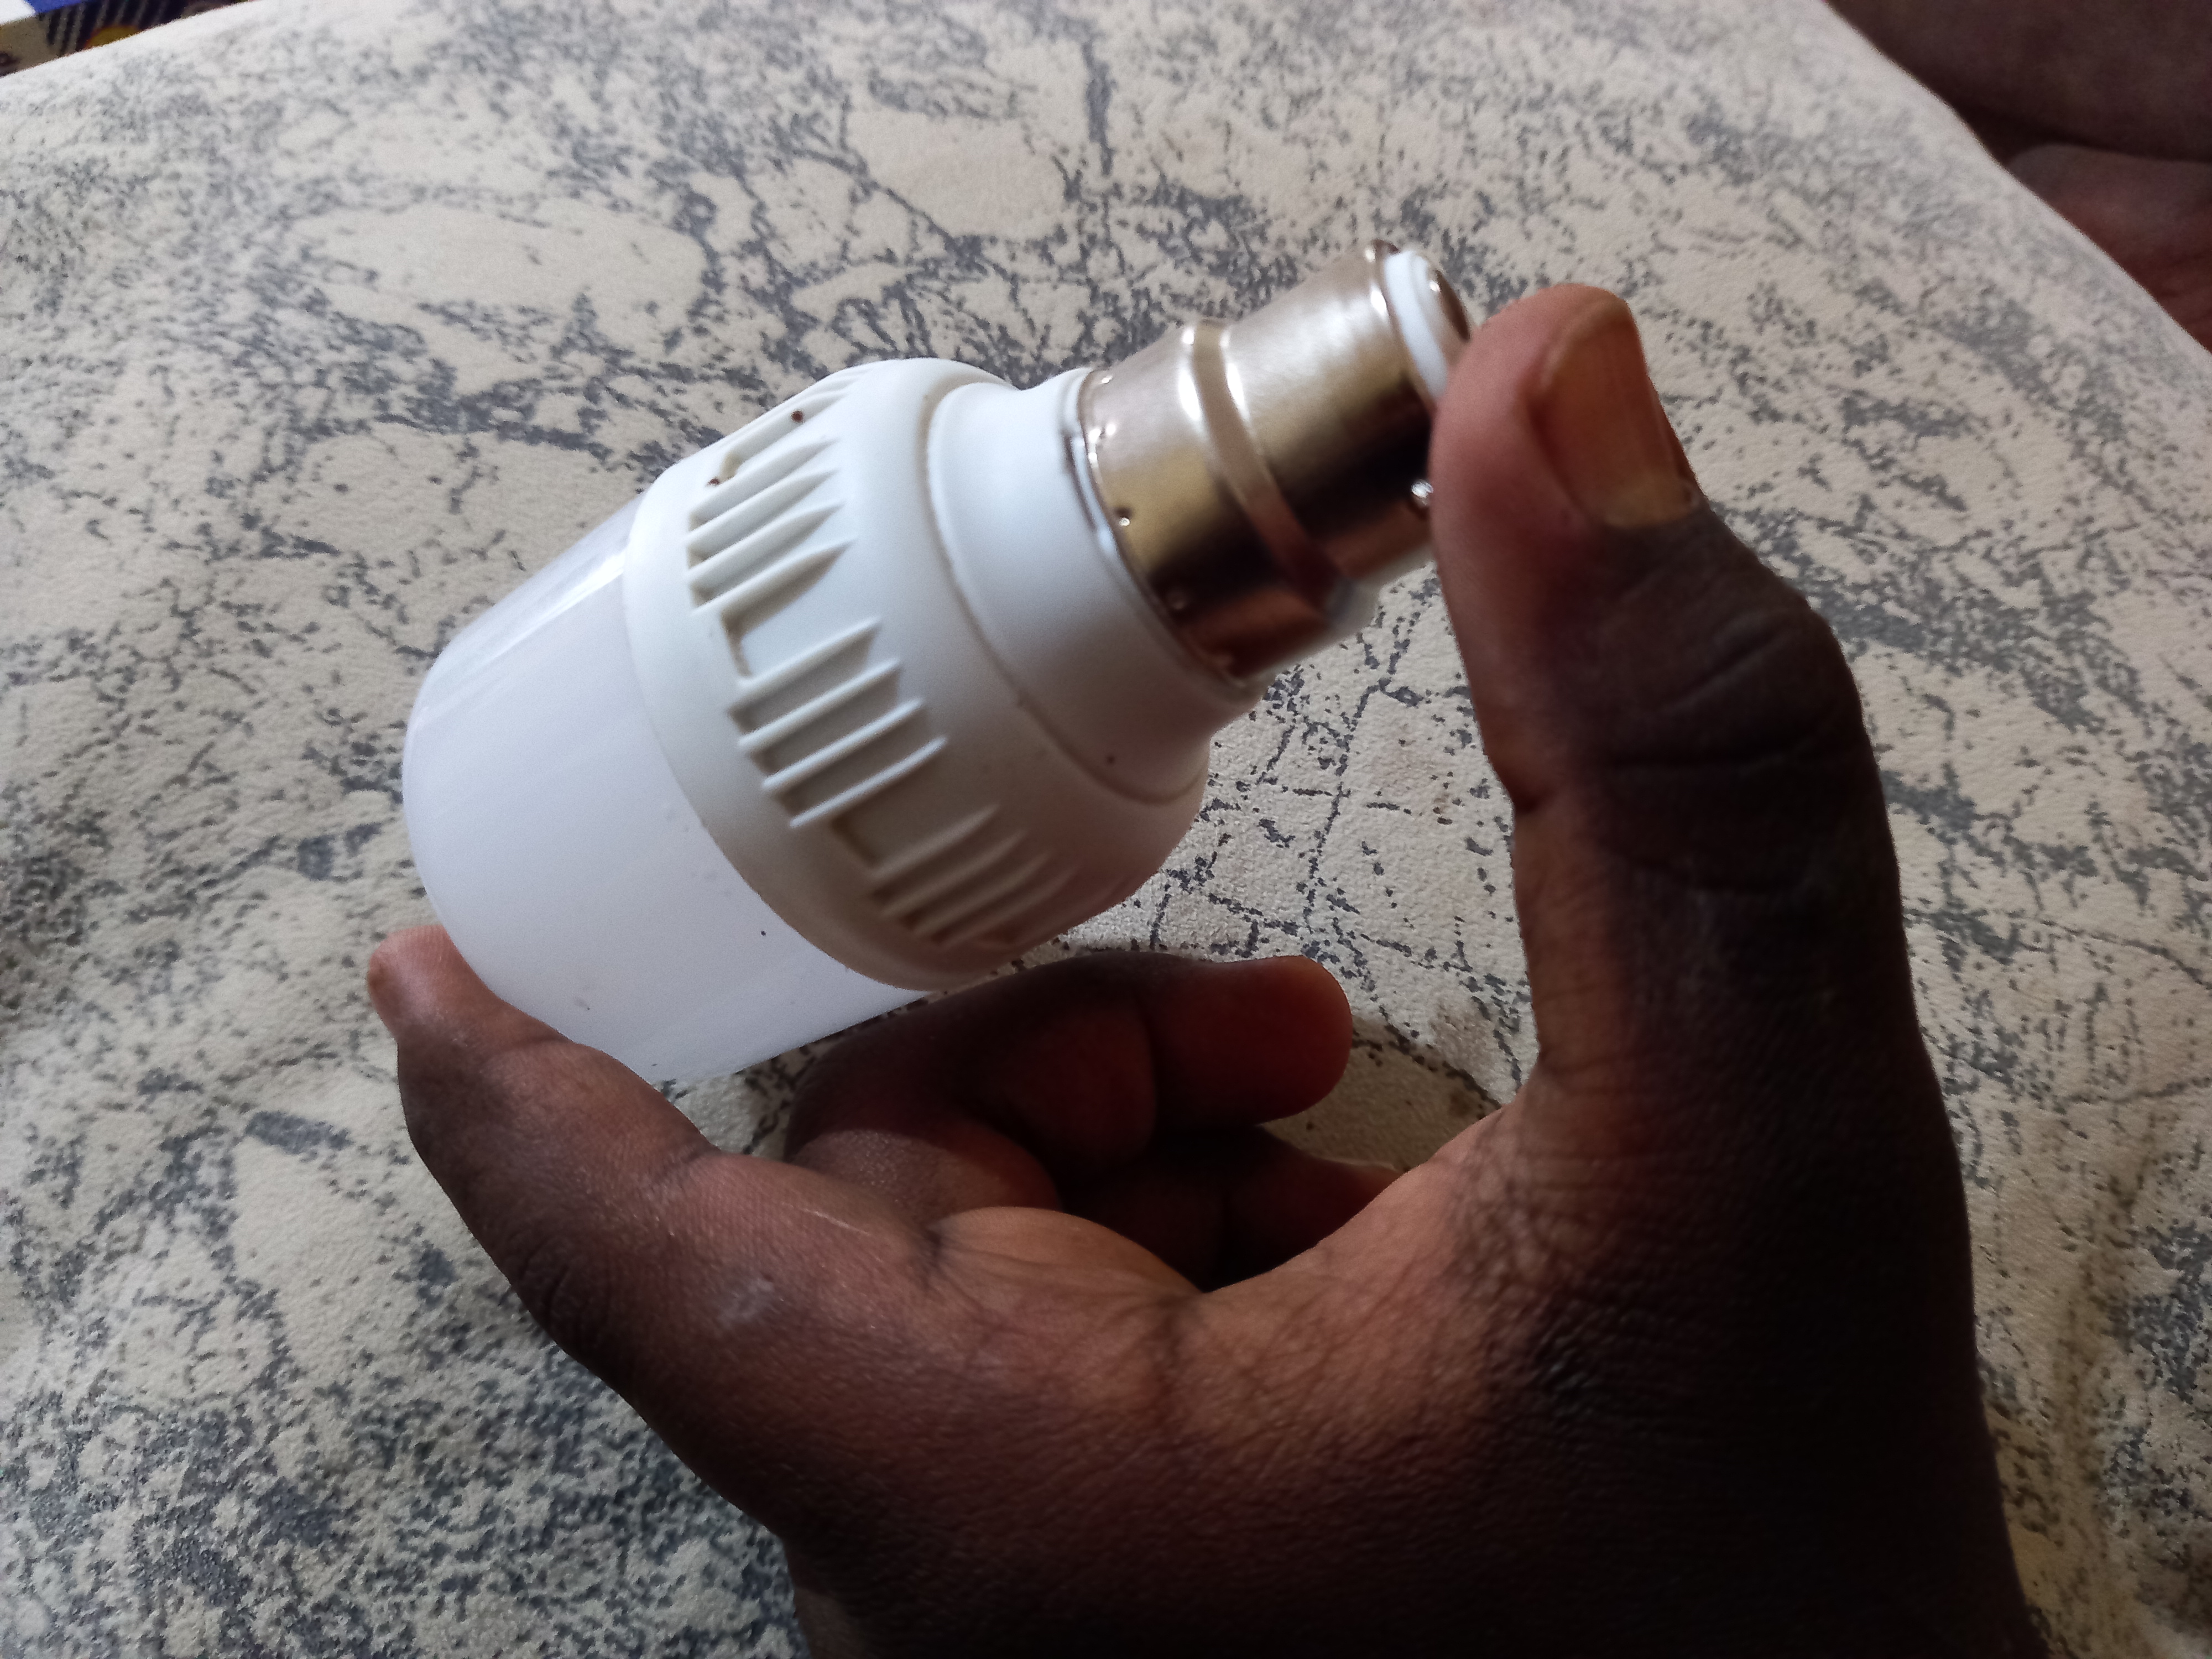 Use of Energy saving bulbs in my home